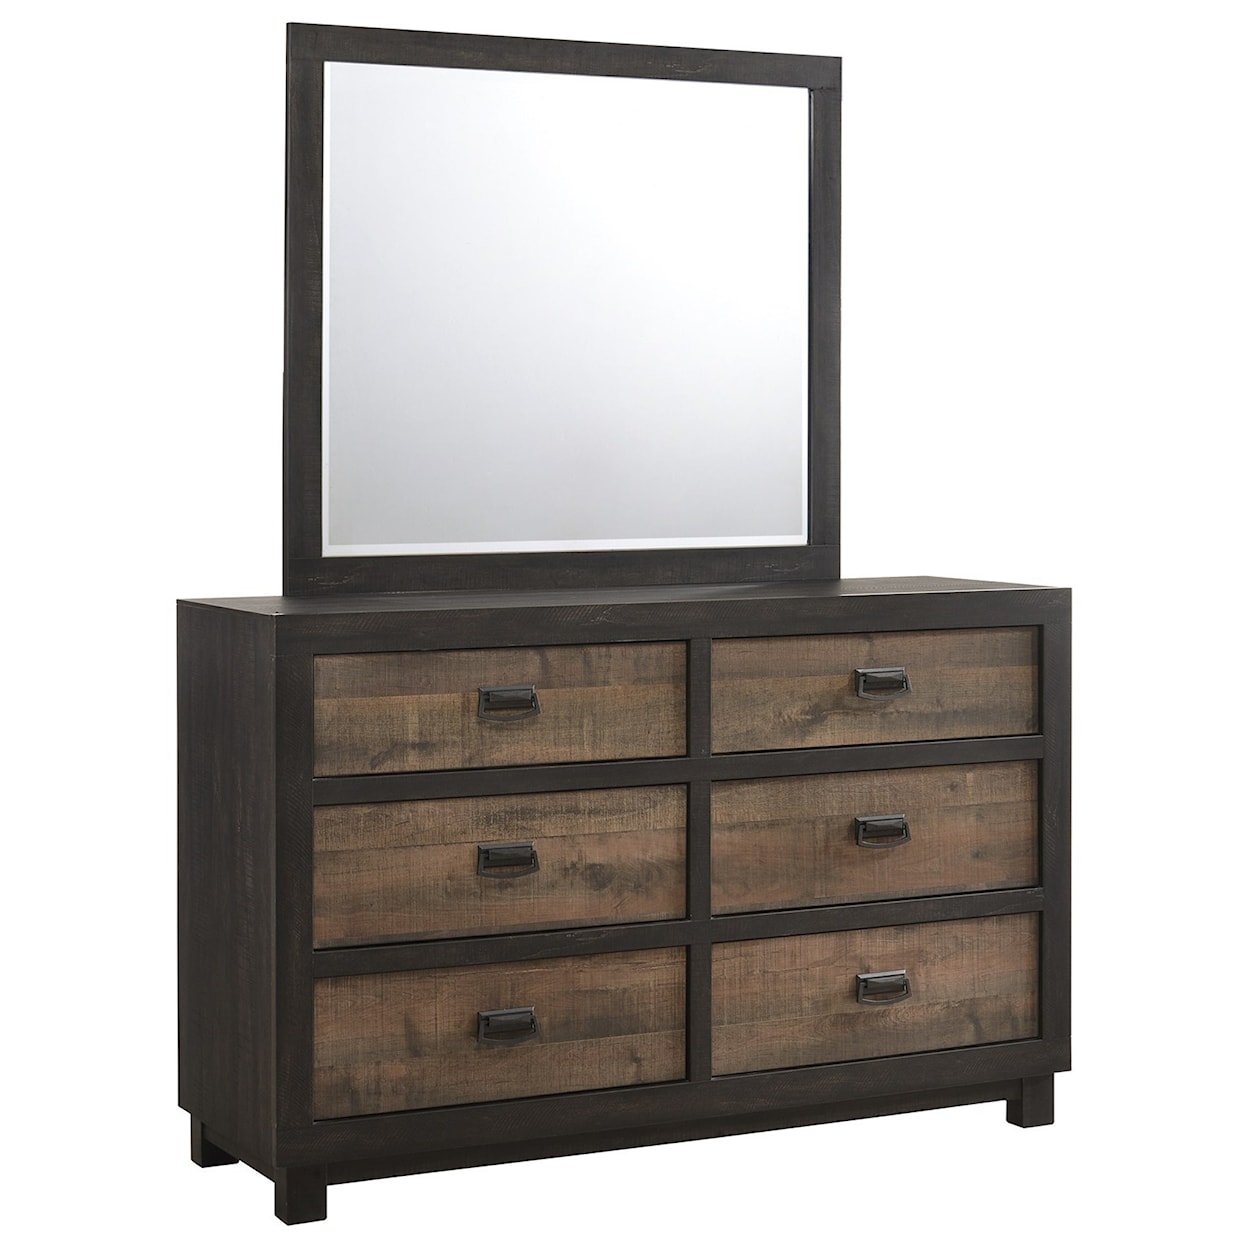 Elements International Harlington 6-Drawer Dresser w/ Mirror Set